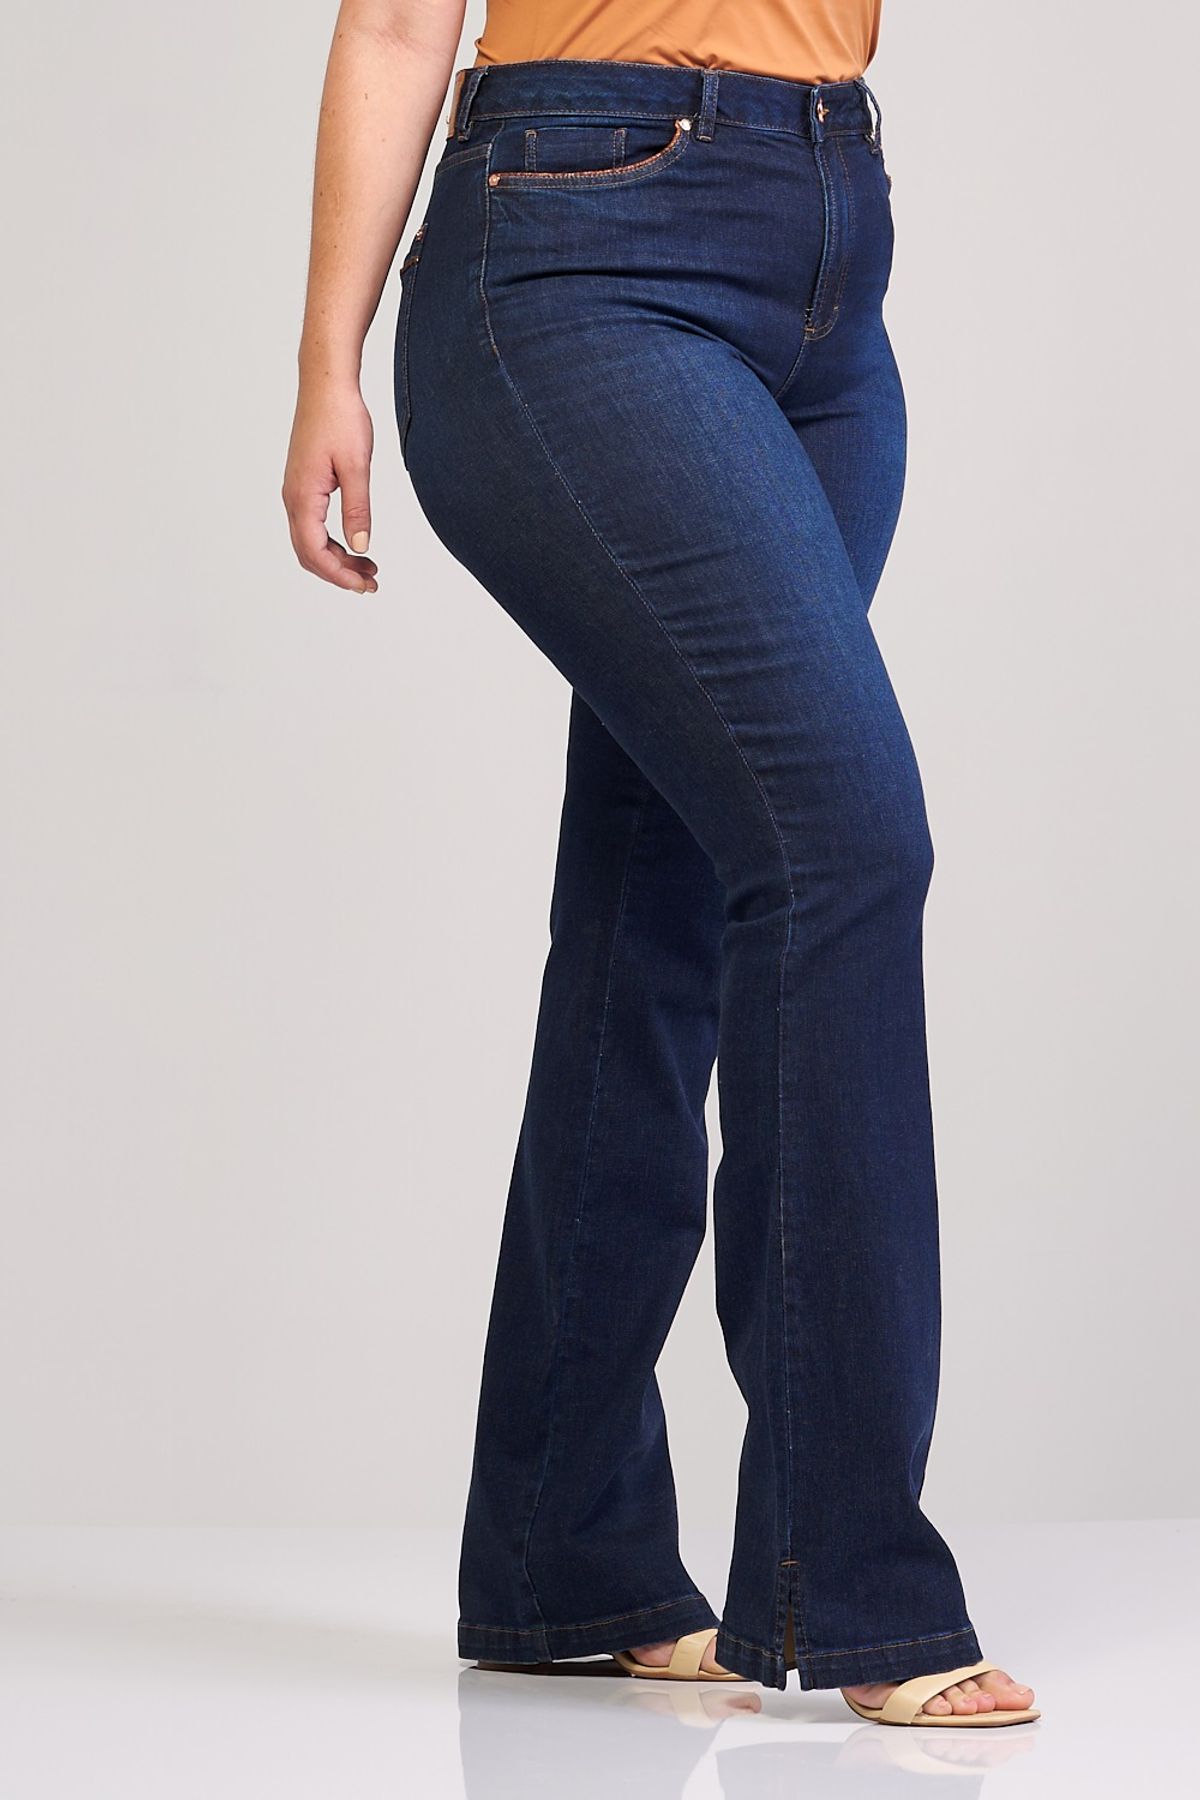 Calça Patogê feminina boot cut curvy jeans cintura média (G3) CL37130